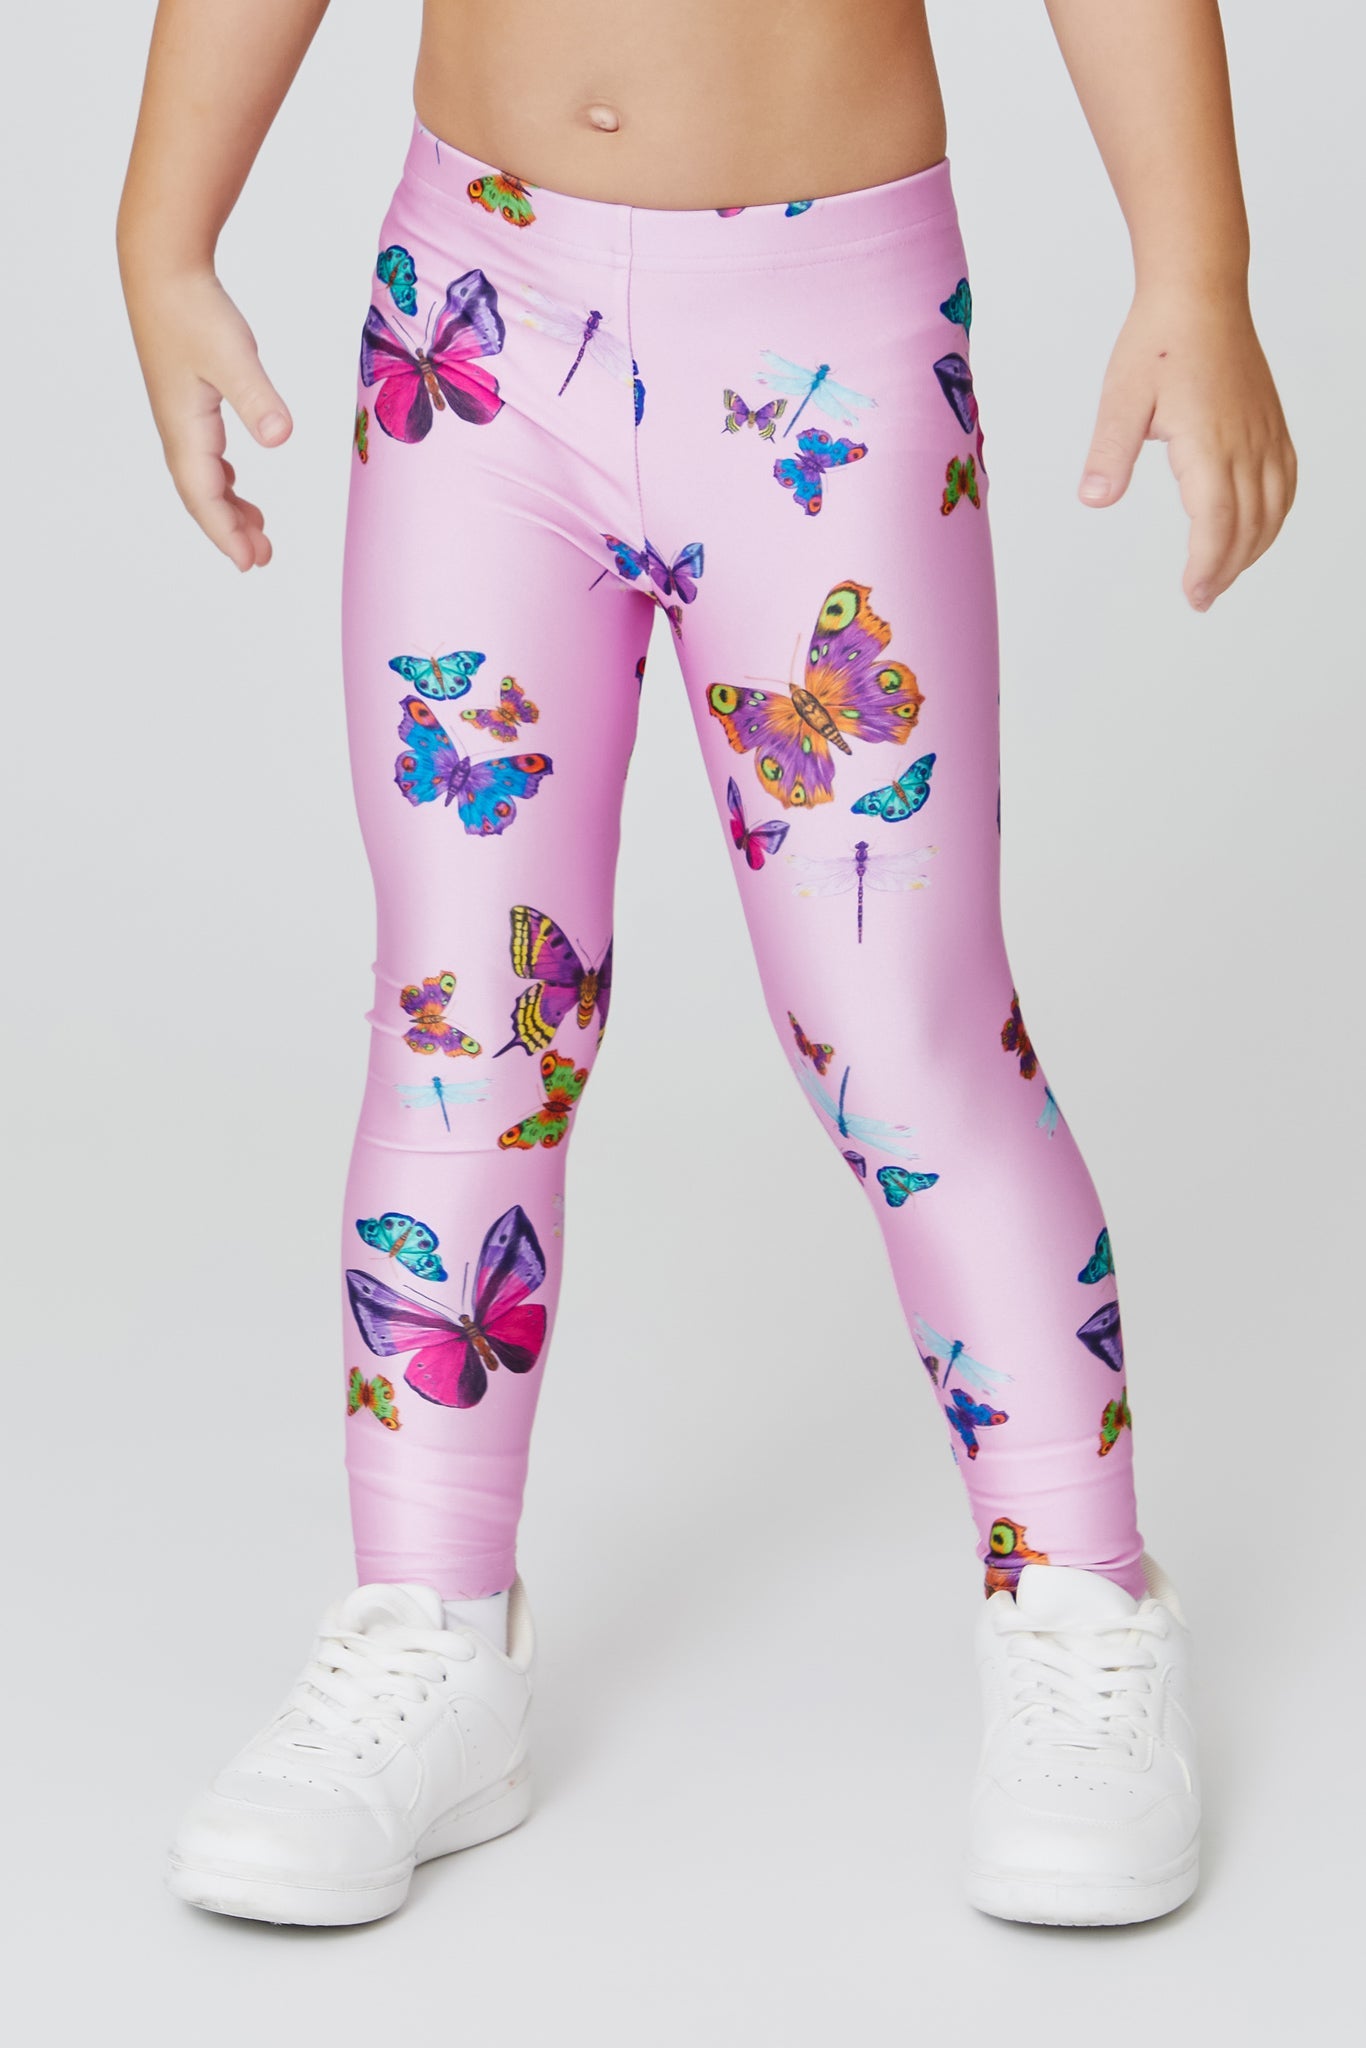 Girls Leggings in Pink Neon Butterflies